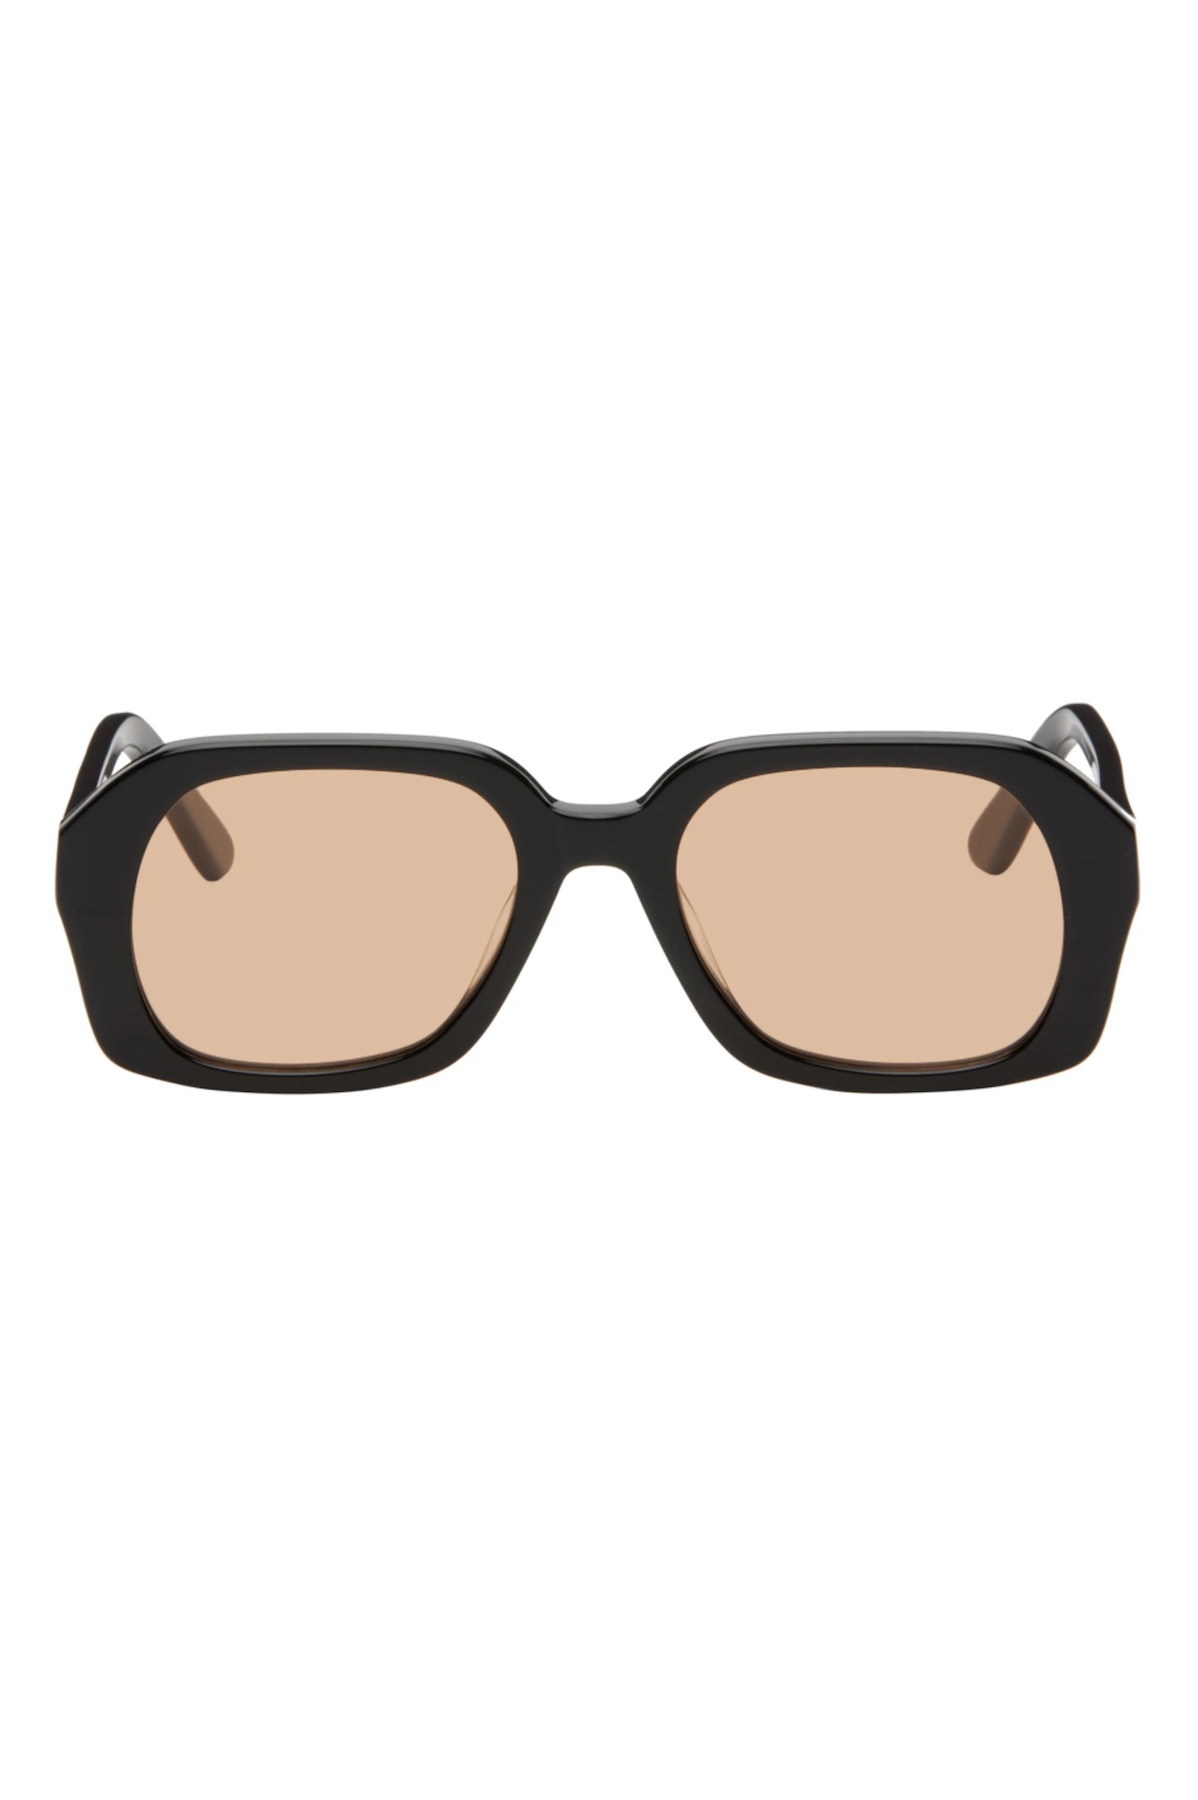 Sunglasses Eyewear WeLoveGlasses Shop Buy Online Trend Influencers Black Velvet Canyon